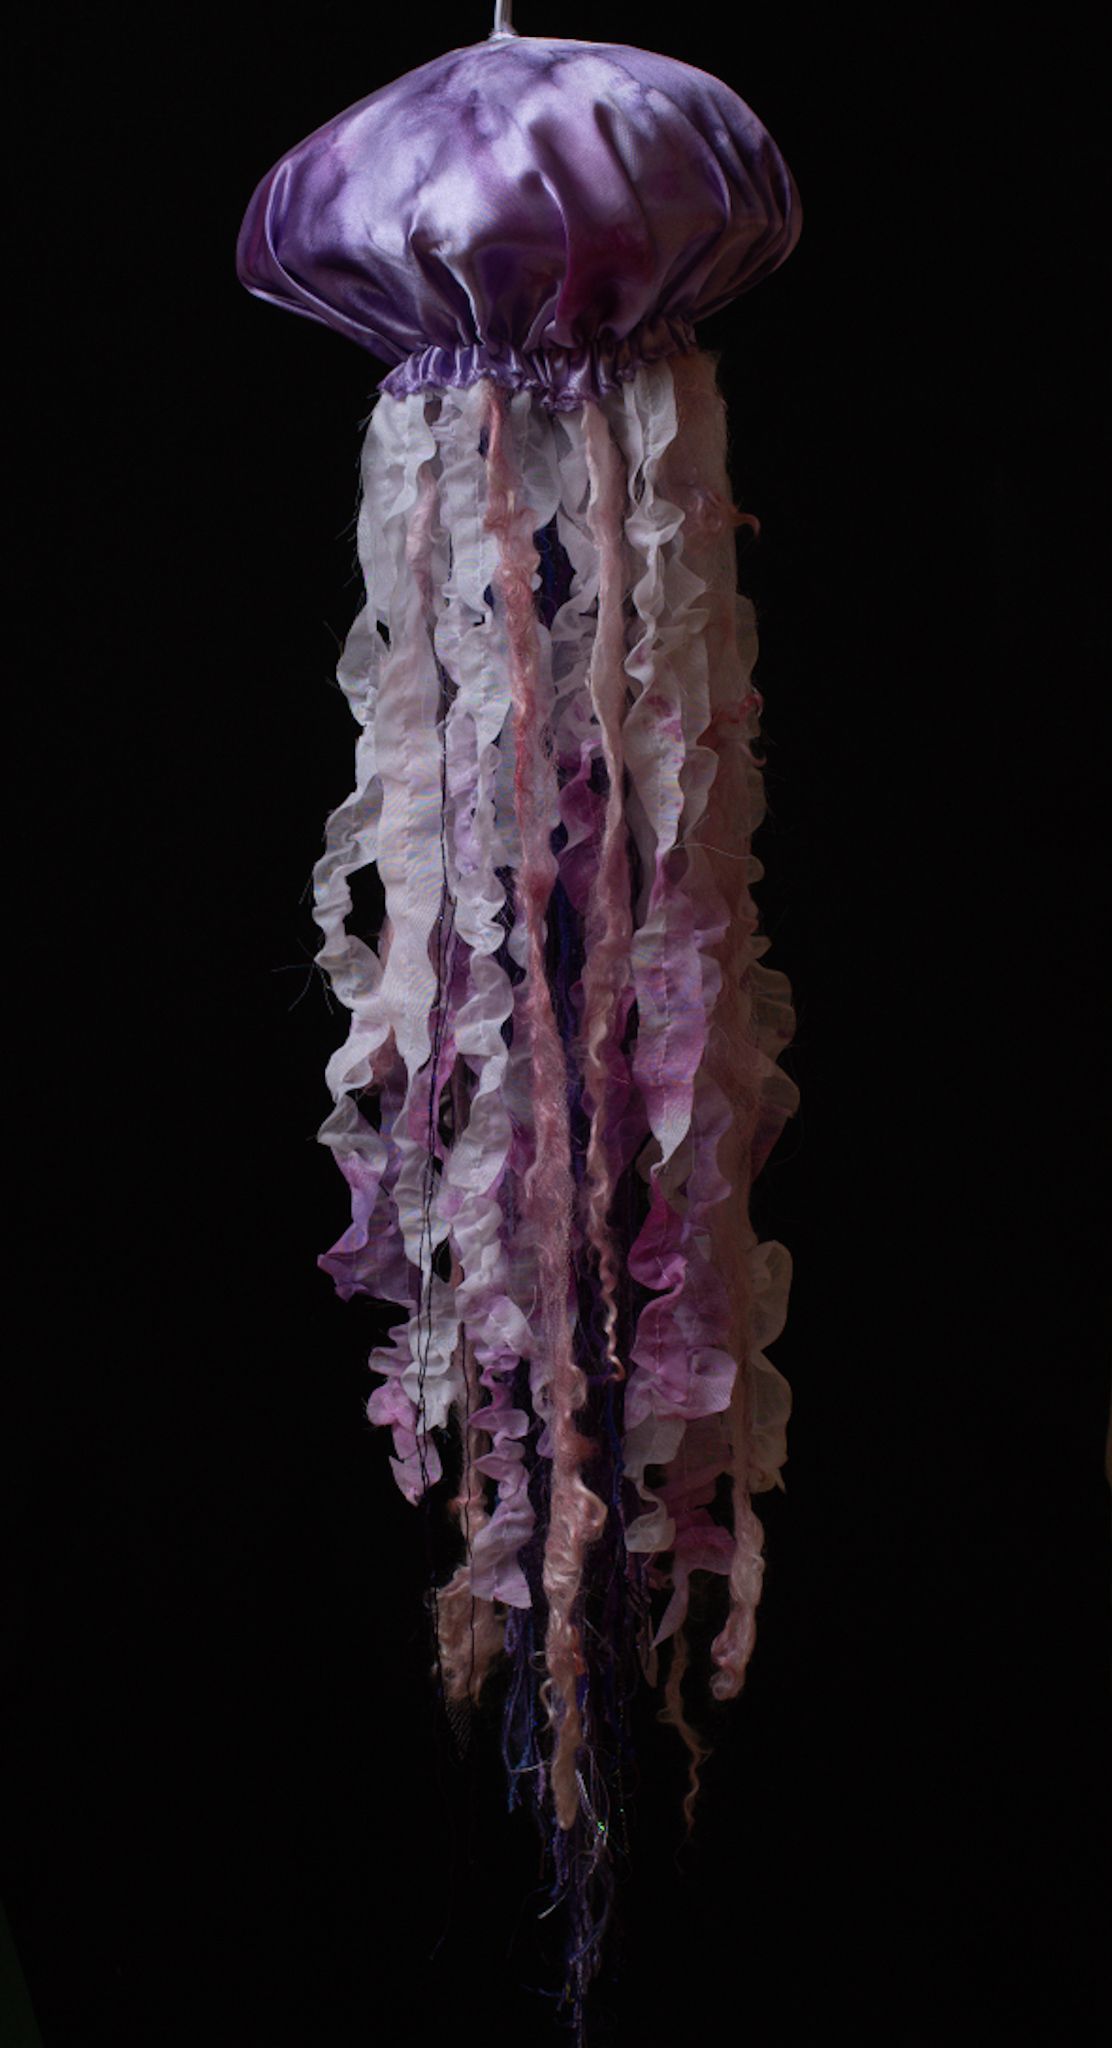 Sherry Henrickson - "Jellyfish Lamp #4"